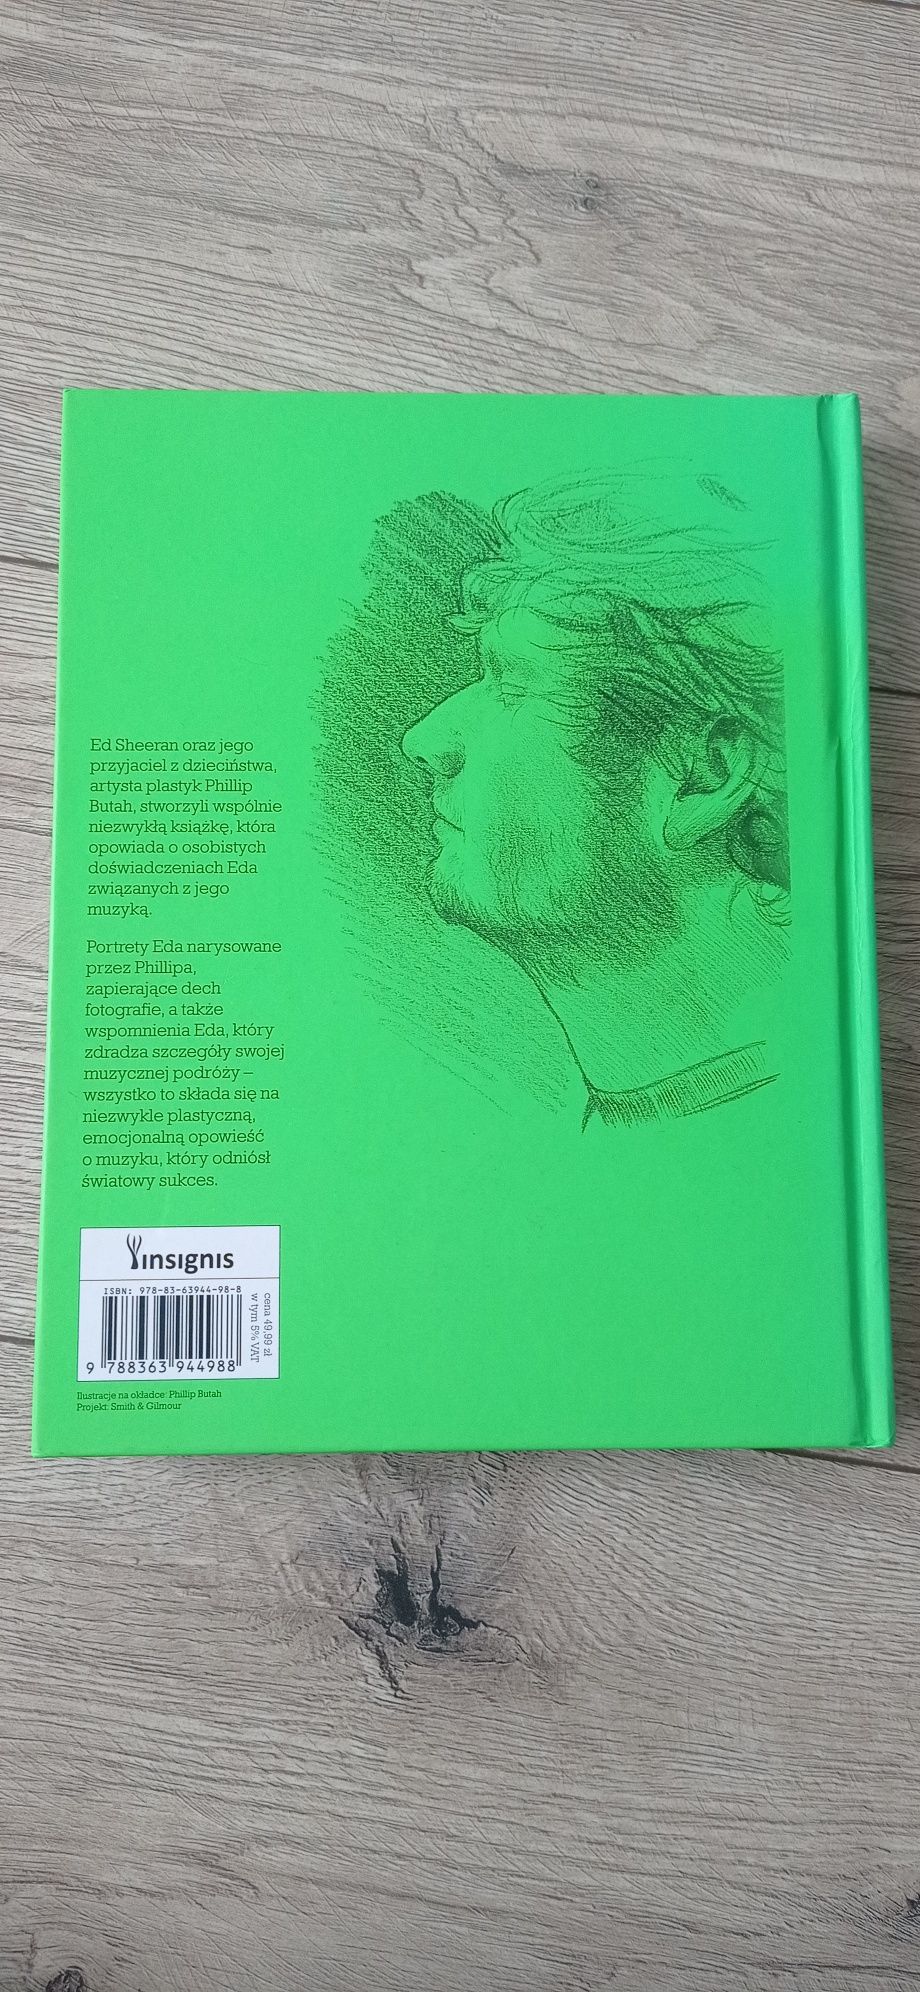 Książka Ed Sheeran Graficzna podróż